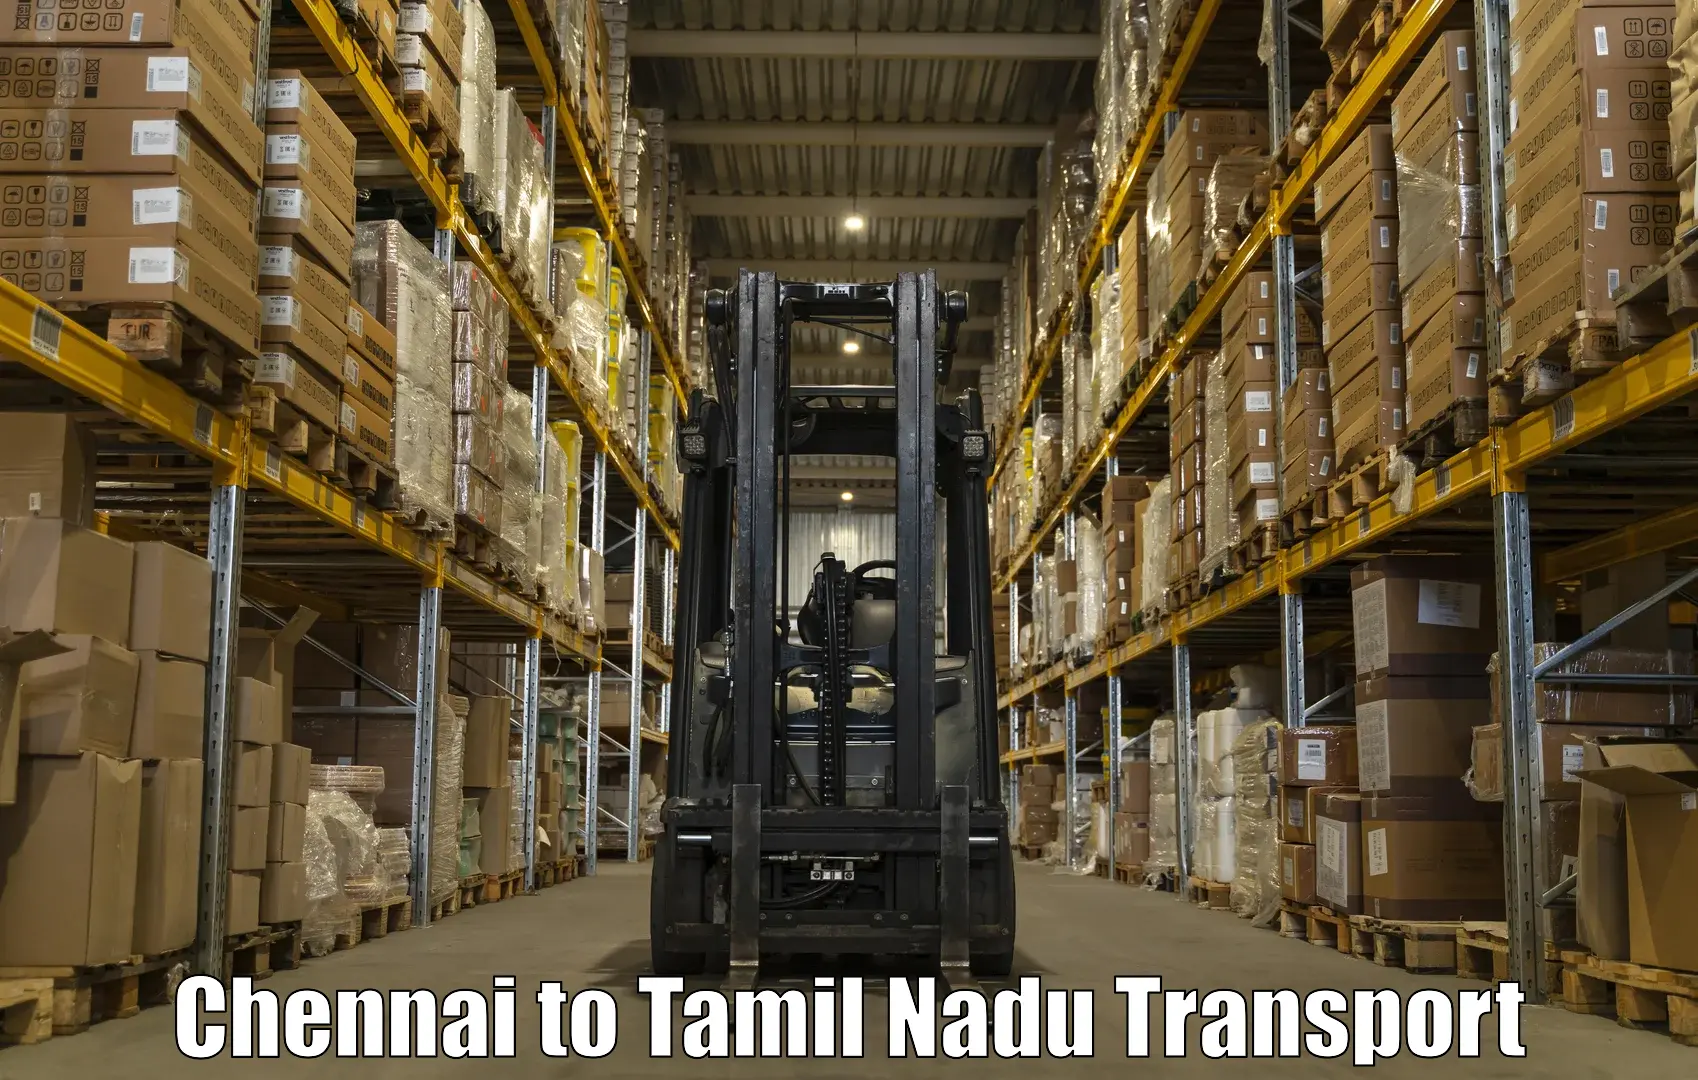 Transport bike from one state to another Chennai to Nilakottai